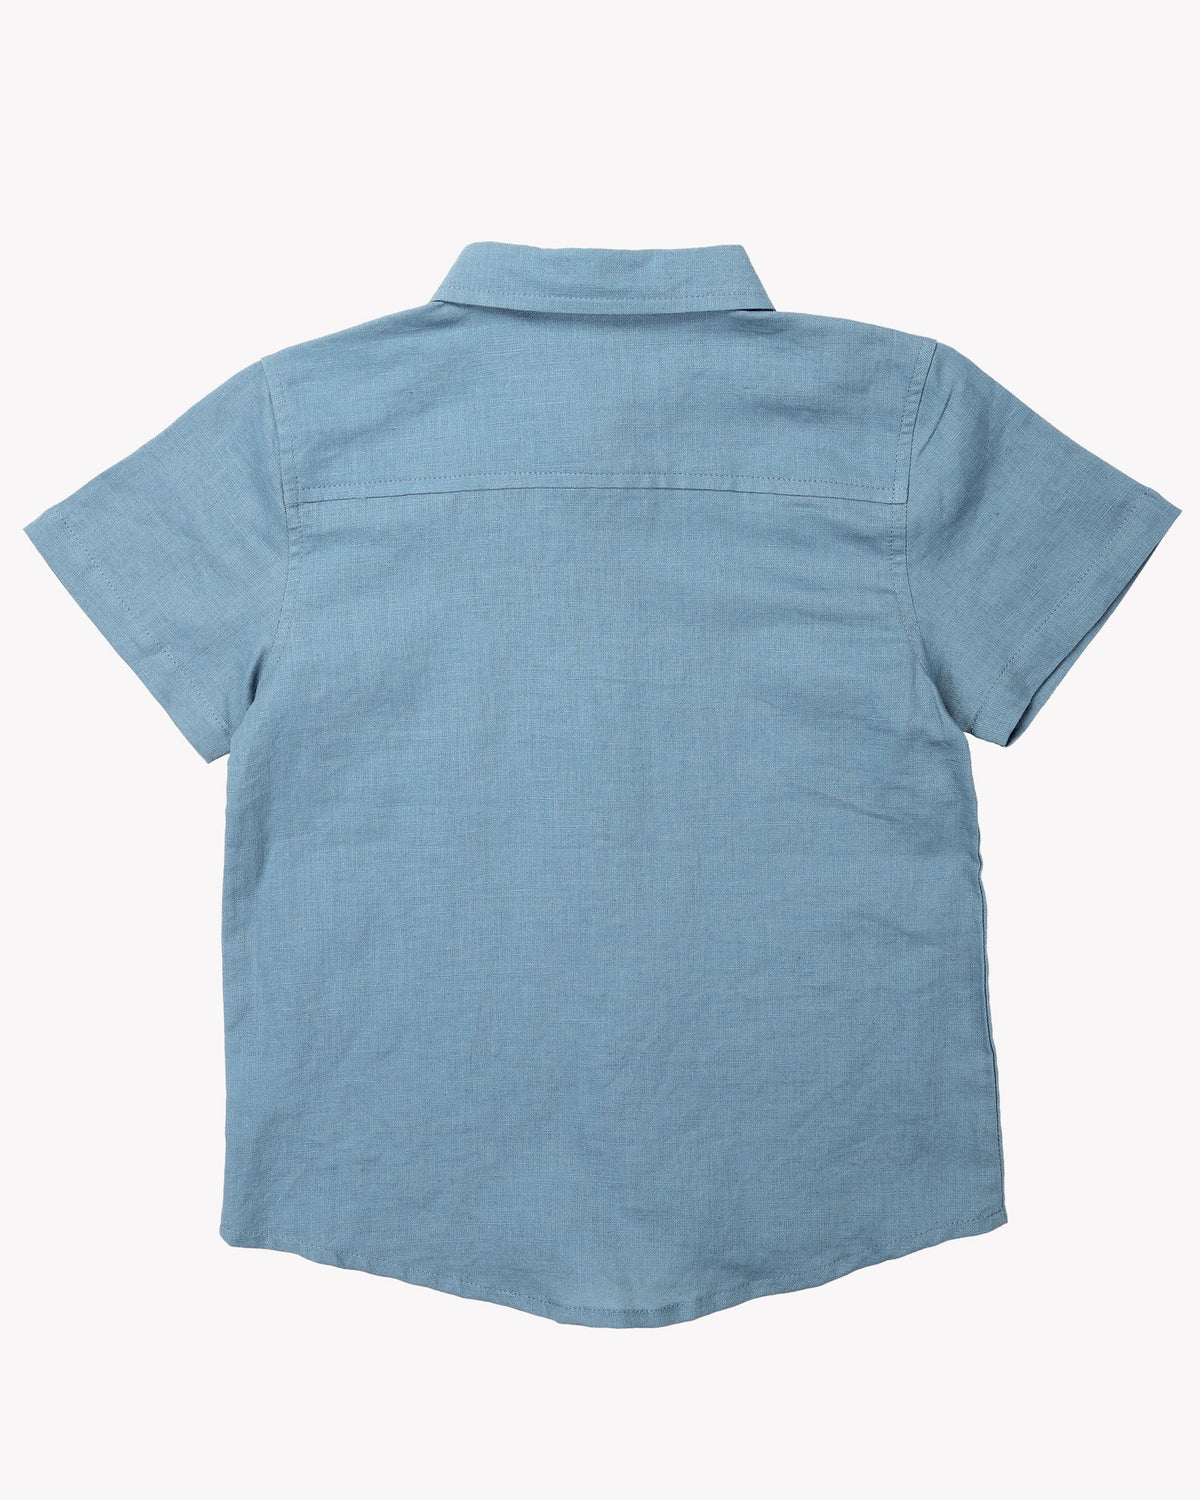 Classic Linen Shirt In Steel Blue Back